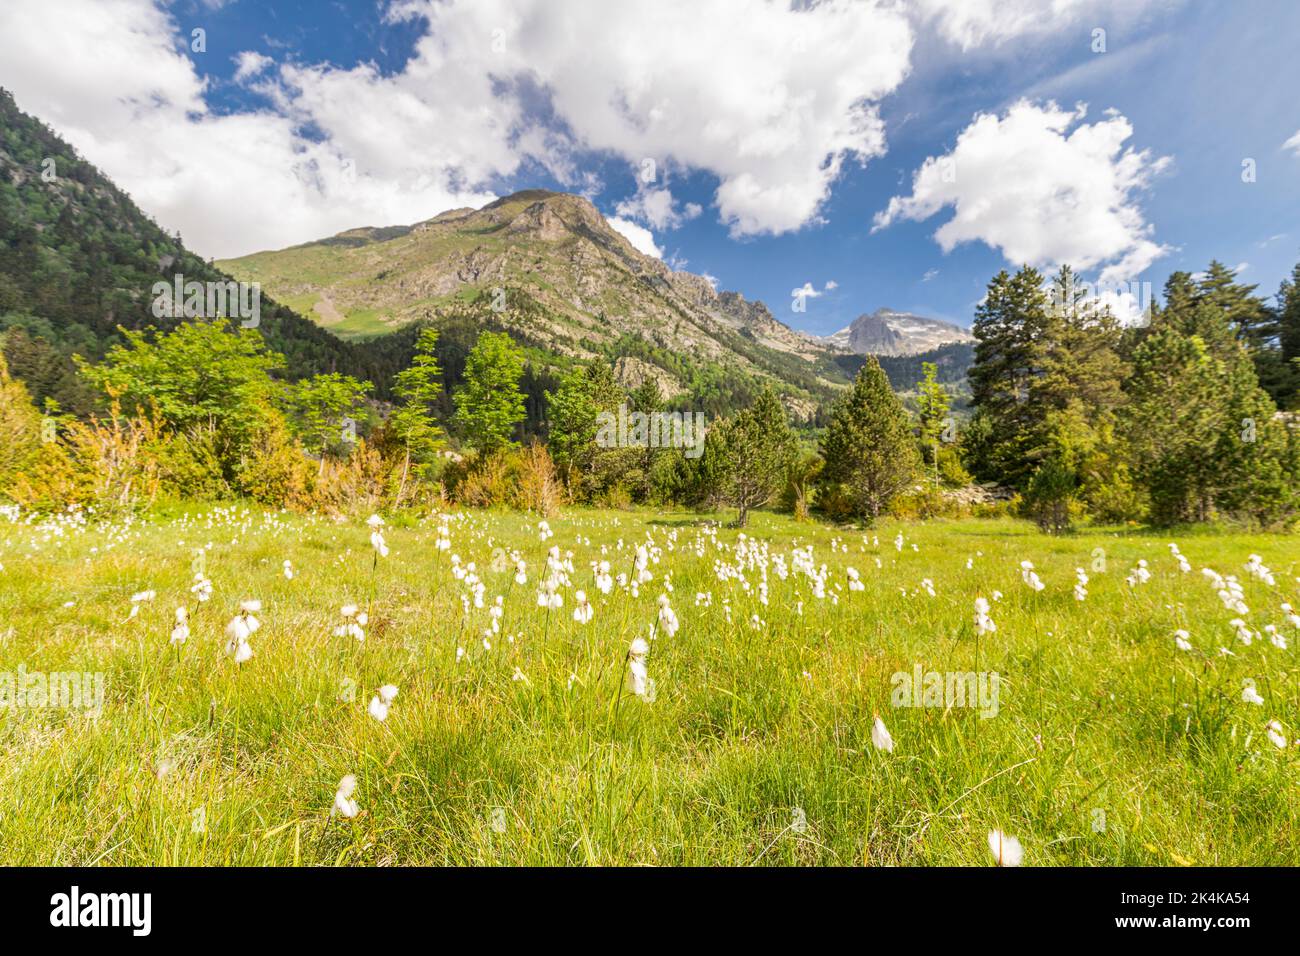 Benasque Valley, Natural Park of Posets-Maladeta, Benasque, Huesca, Spain Stock Photo